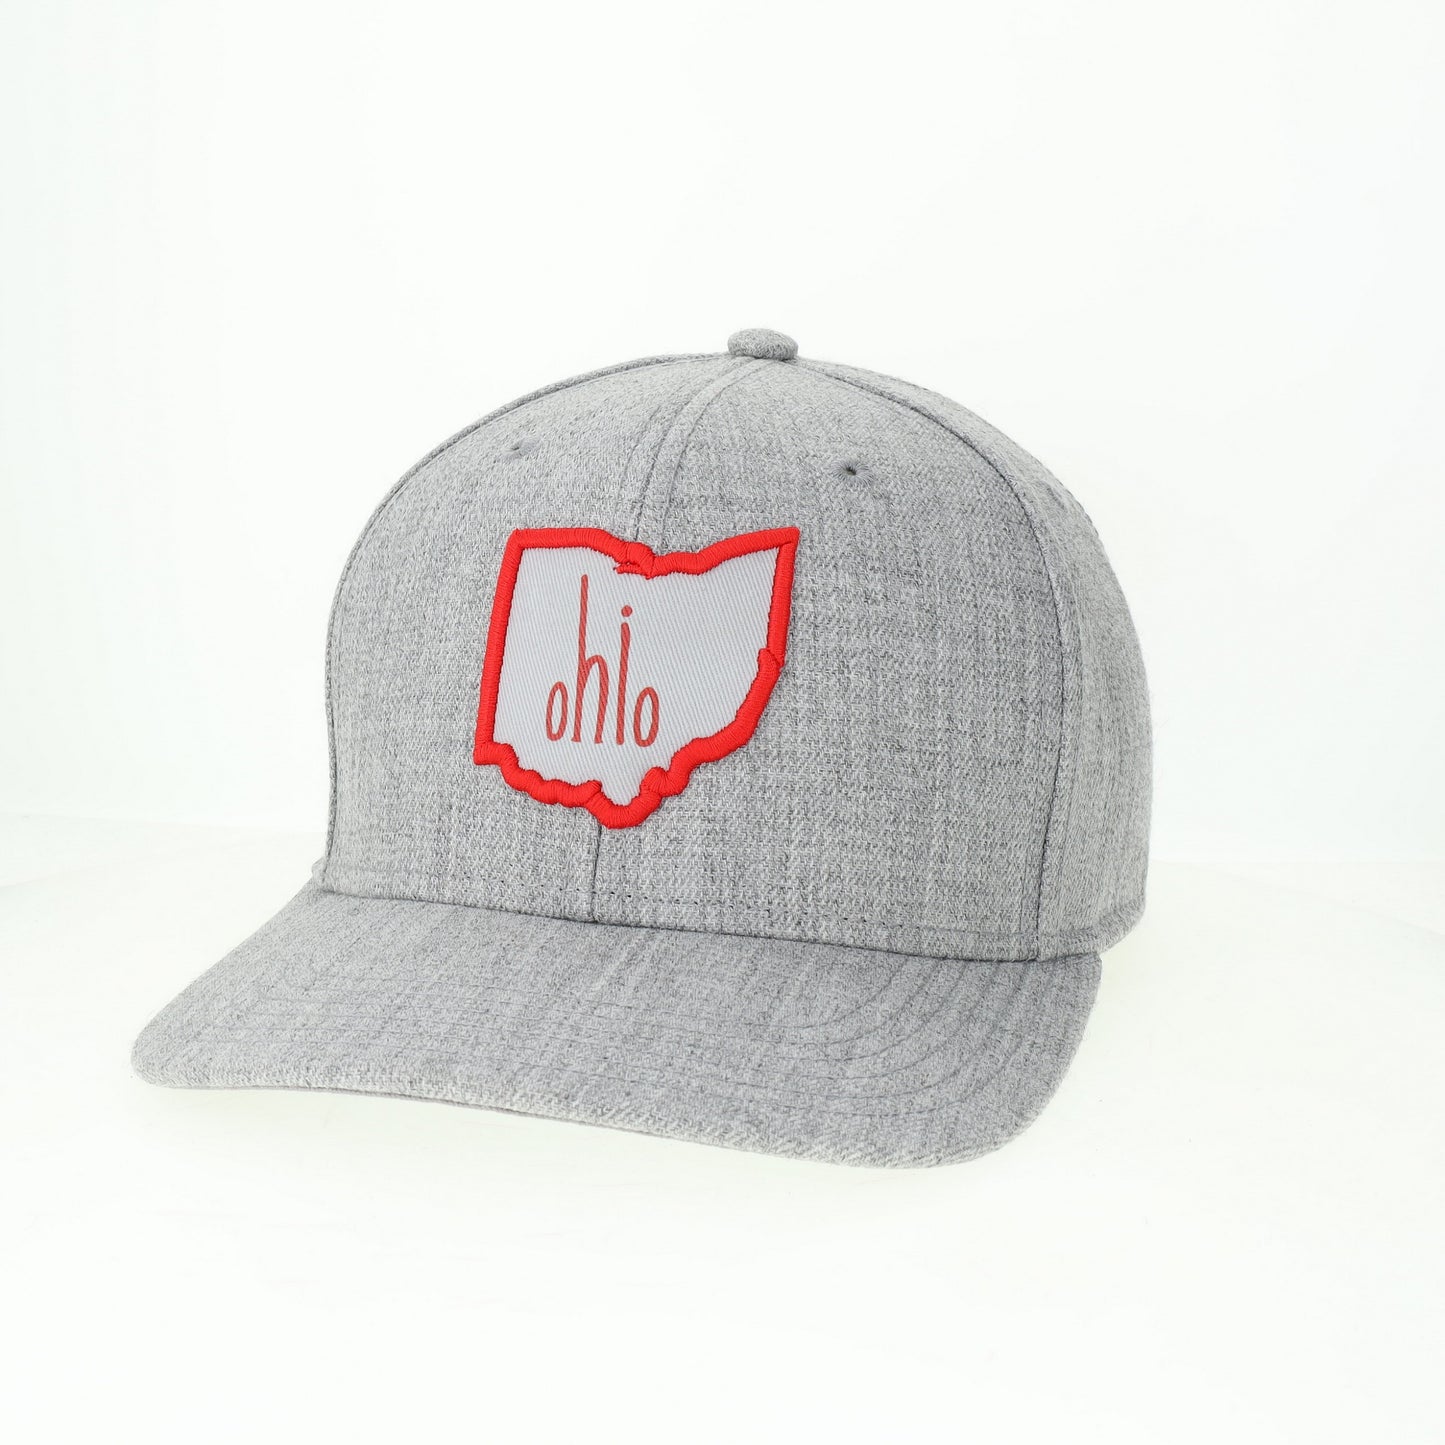 Ohio Mid-Pro Hat in Heather Light Grey